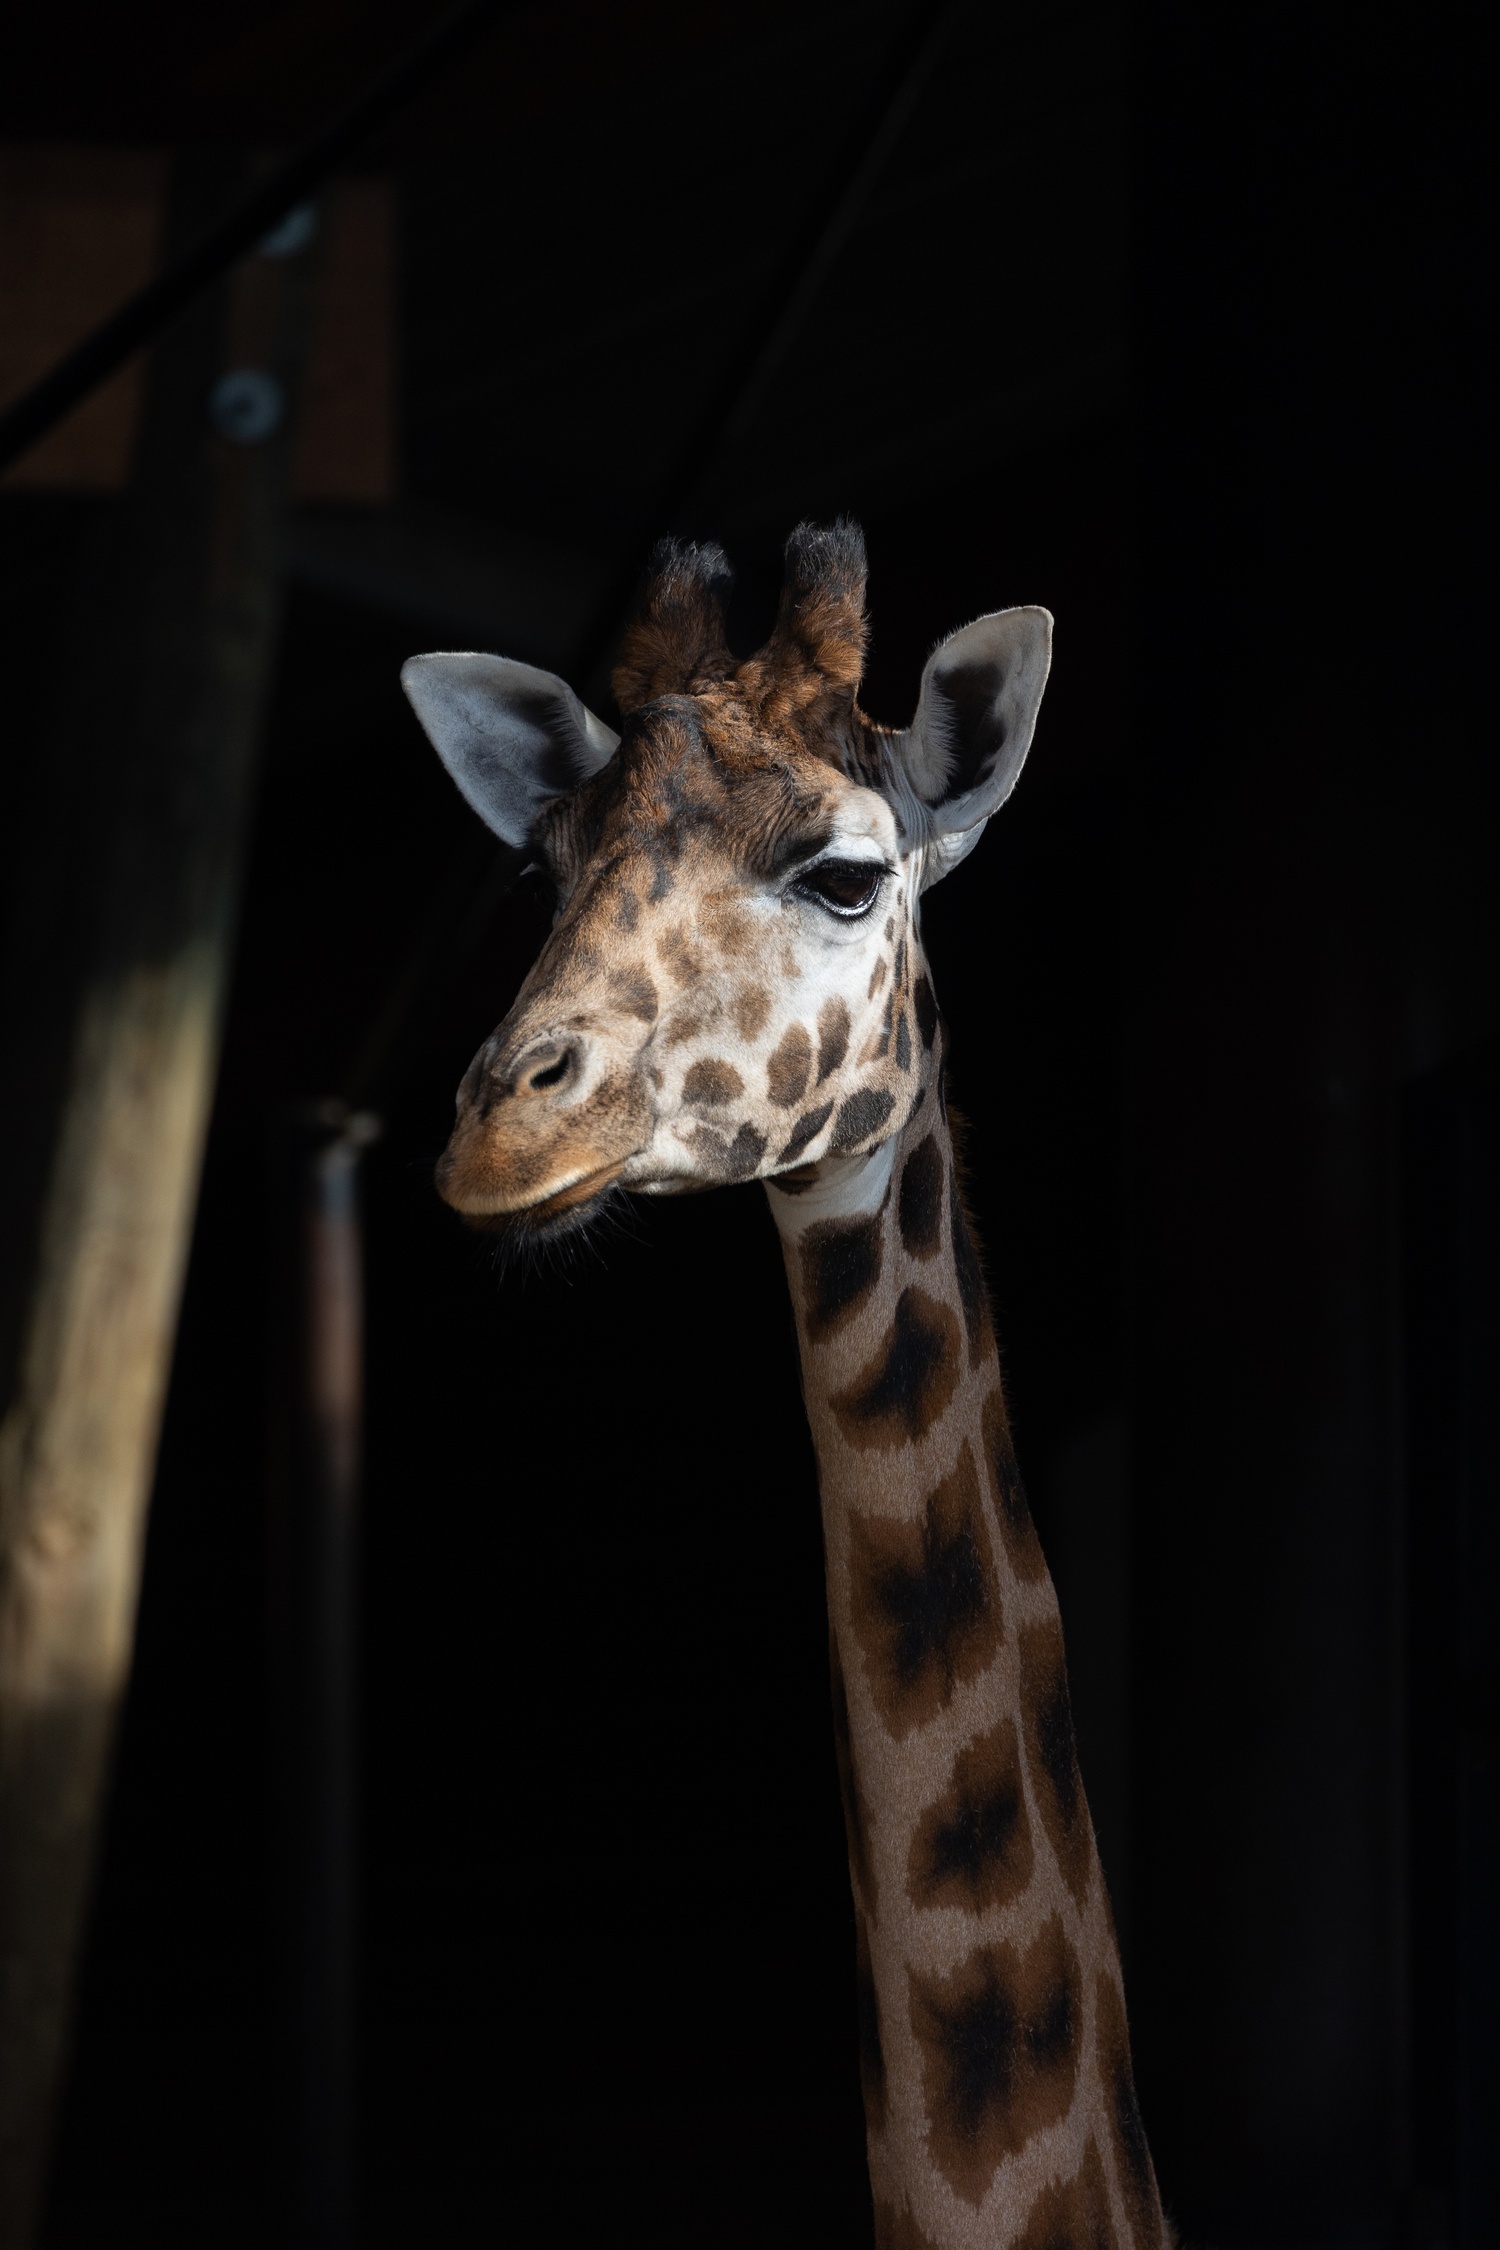 Giraffe looking towards camera highlighted against dark background